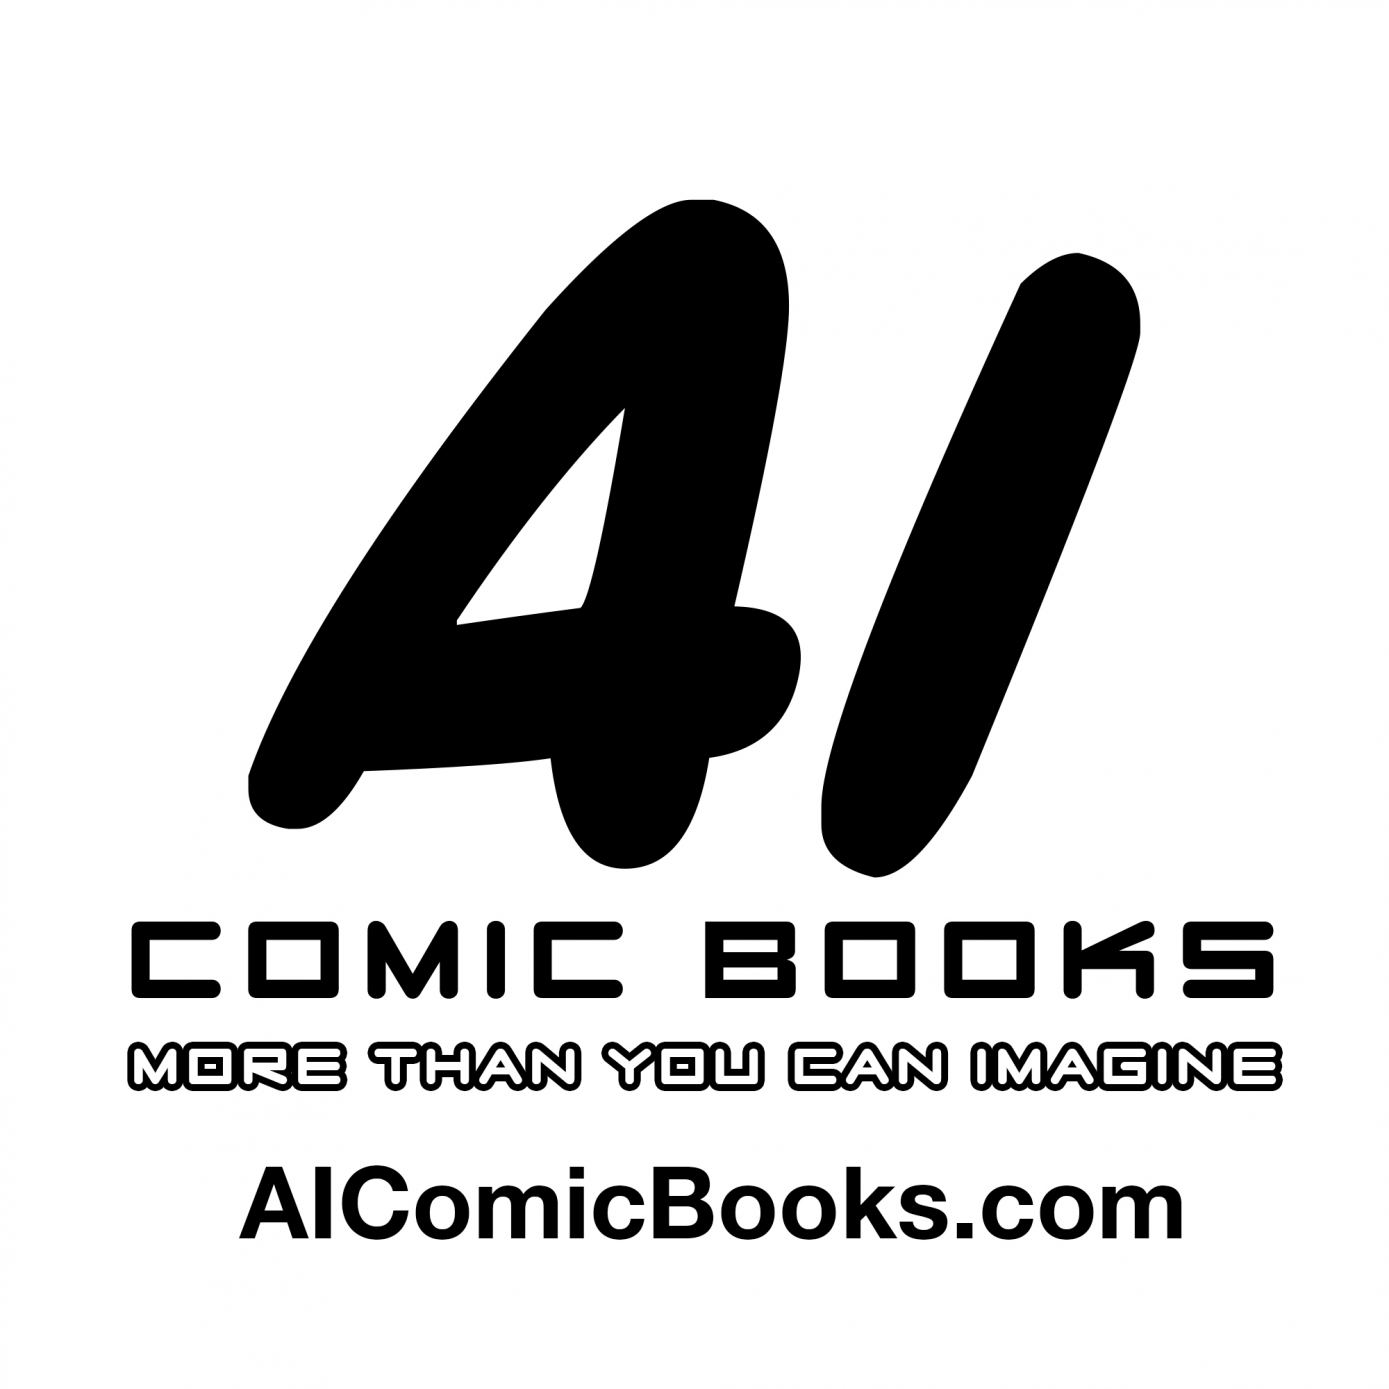 aicomicbooks Logo